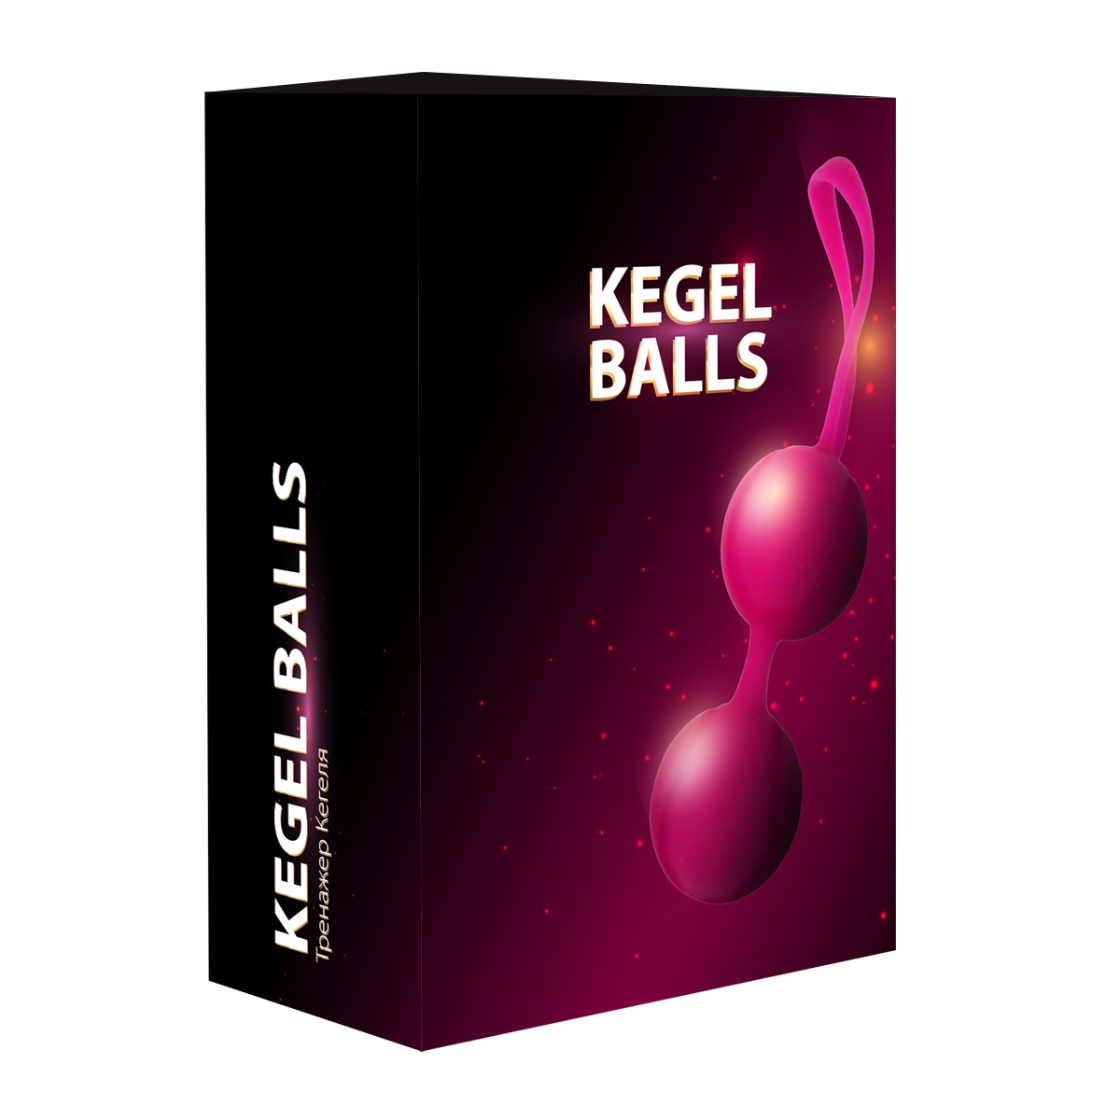 Kiegel Balls